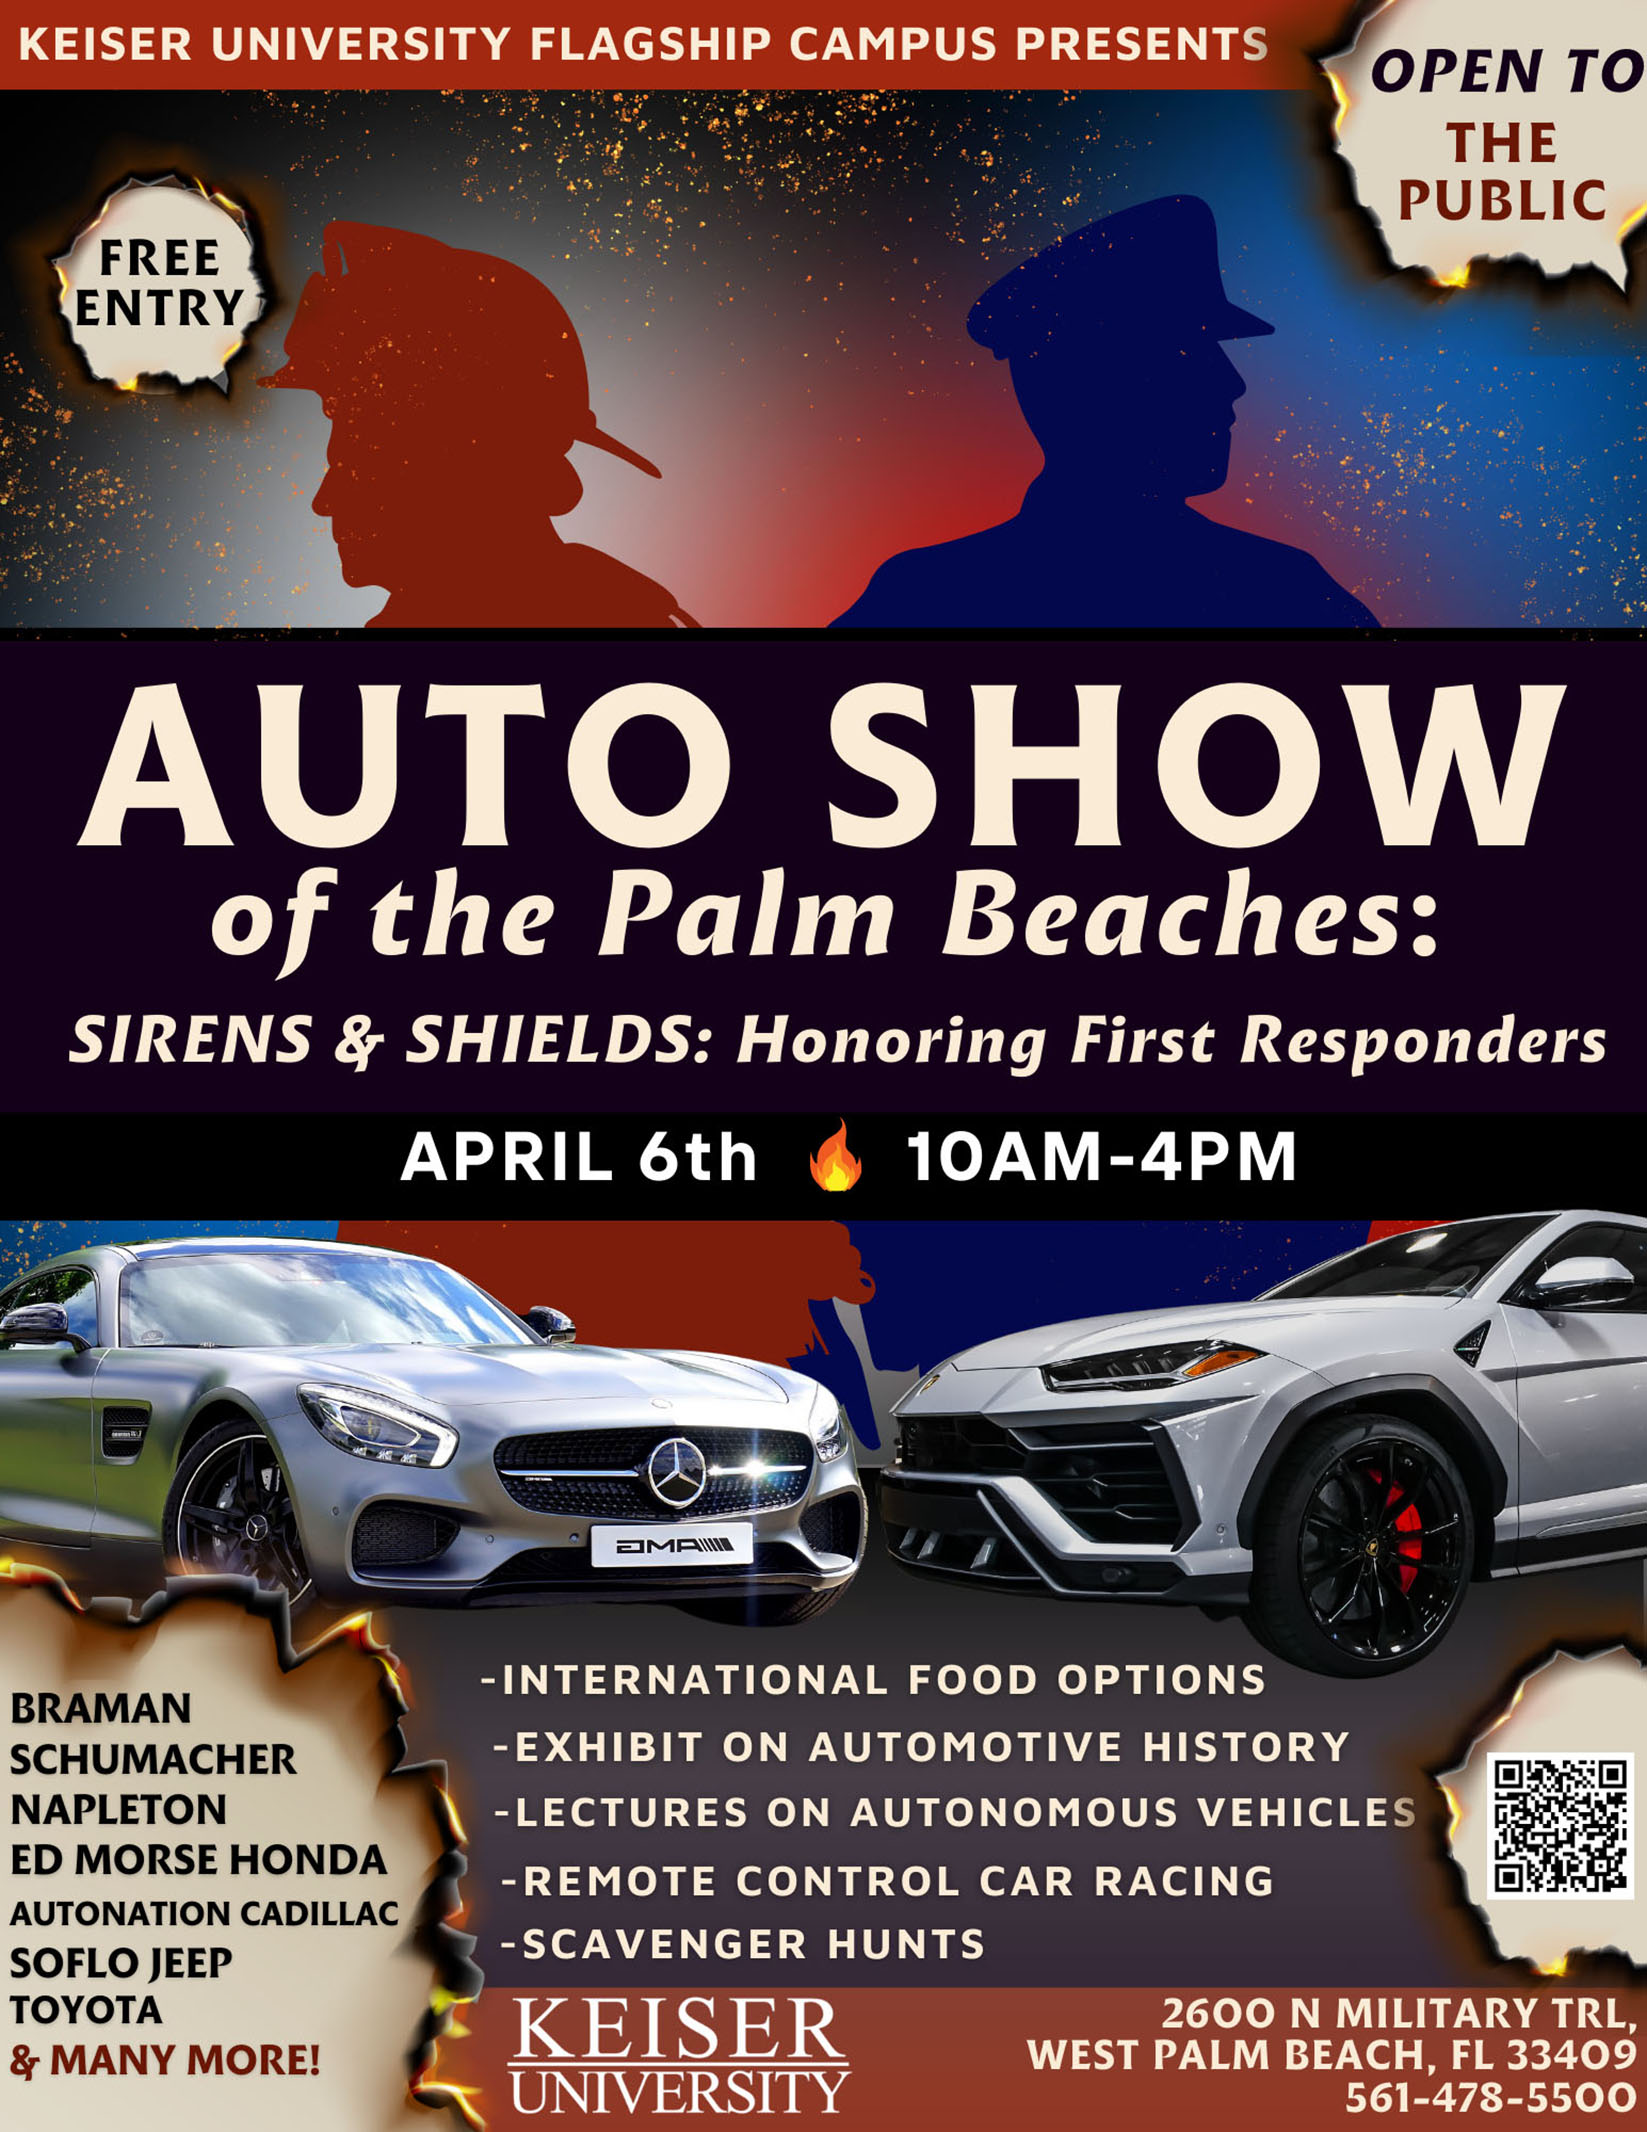 Keiser University Auto Show Of The Palm Beaches - Auto Show Of The Palm Beaches Presented By Keiser University